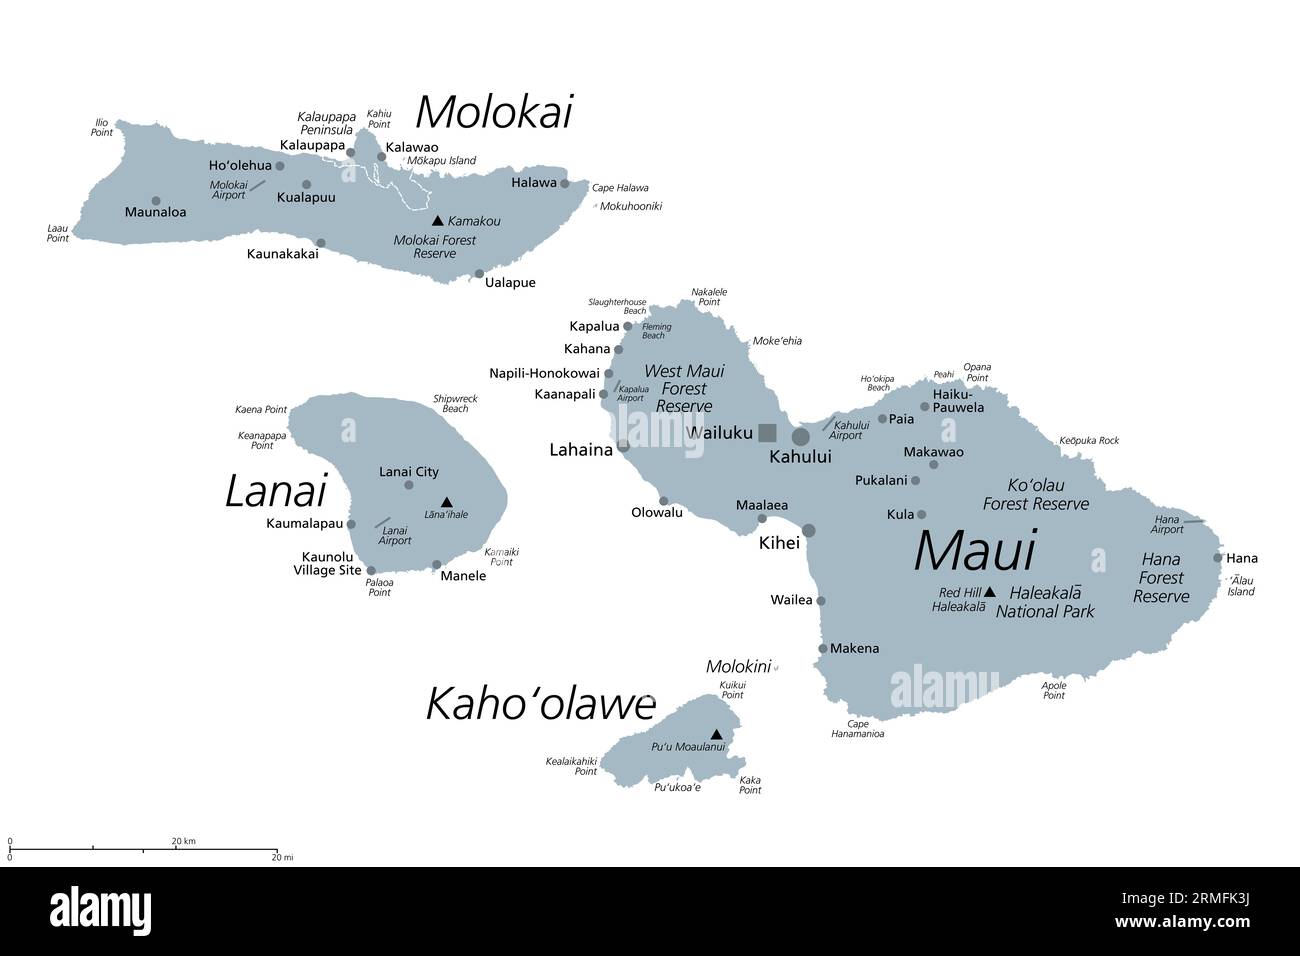 Maui County im US-Bundesstaat Hawaii, graue politische Landkarte mit Wailuku als Sitz. Bestehend aus den Inseln Maui, Lanai, Molokai, Kahoolawe und Molokini. Stockfoto